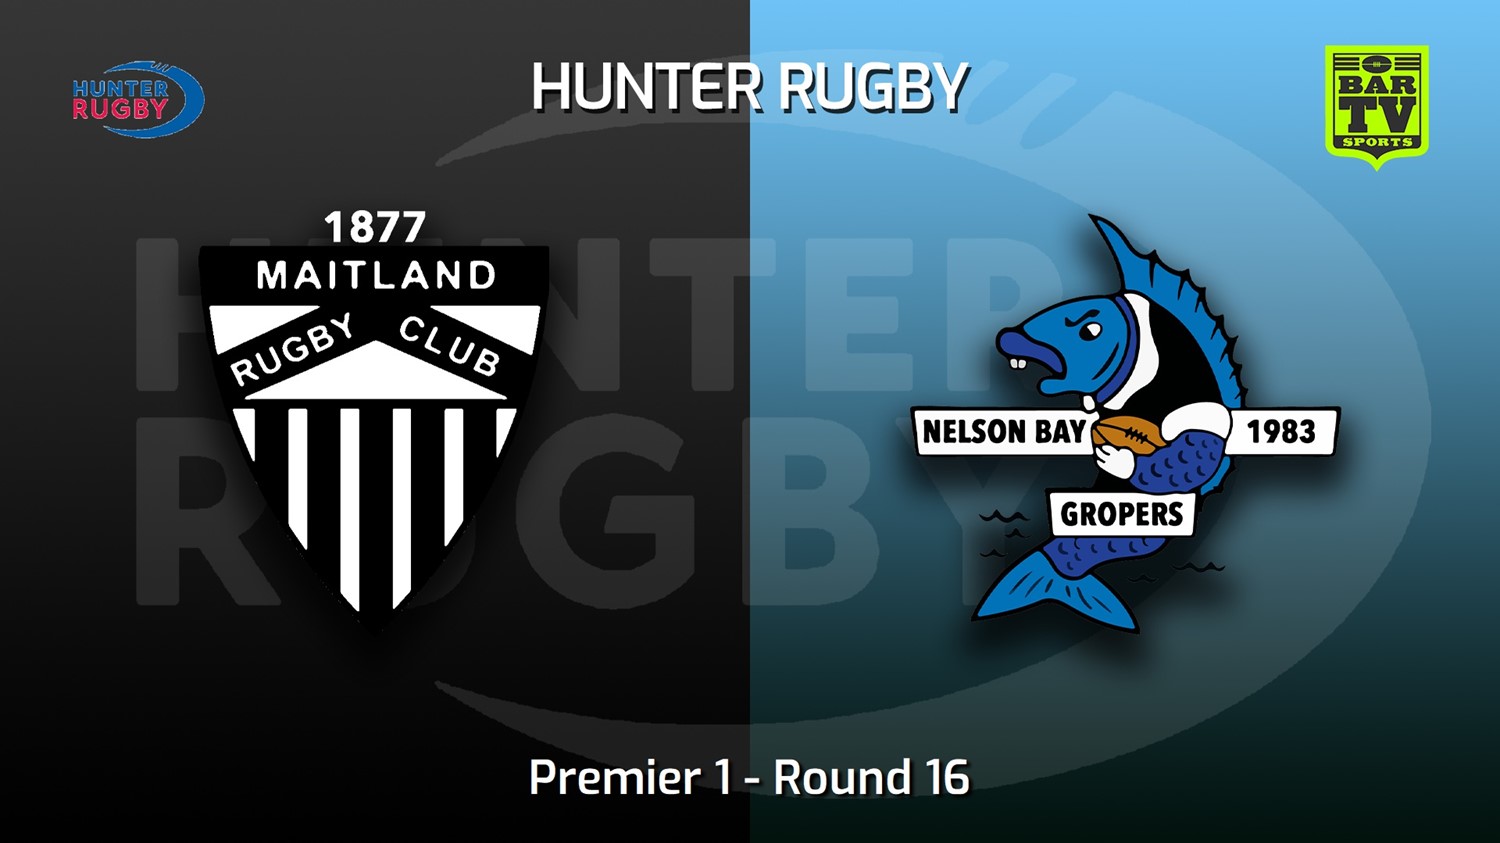 220813-Hunter Rugby Round 16 - Premier 1 - Maitland v Nelson Bay Gropers Slate Image